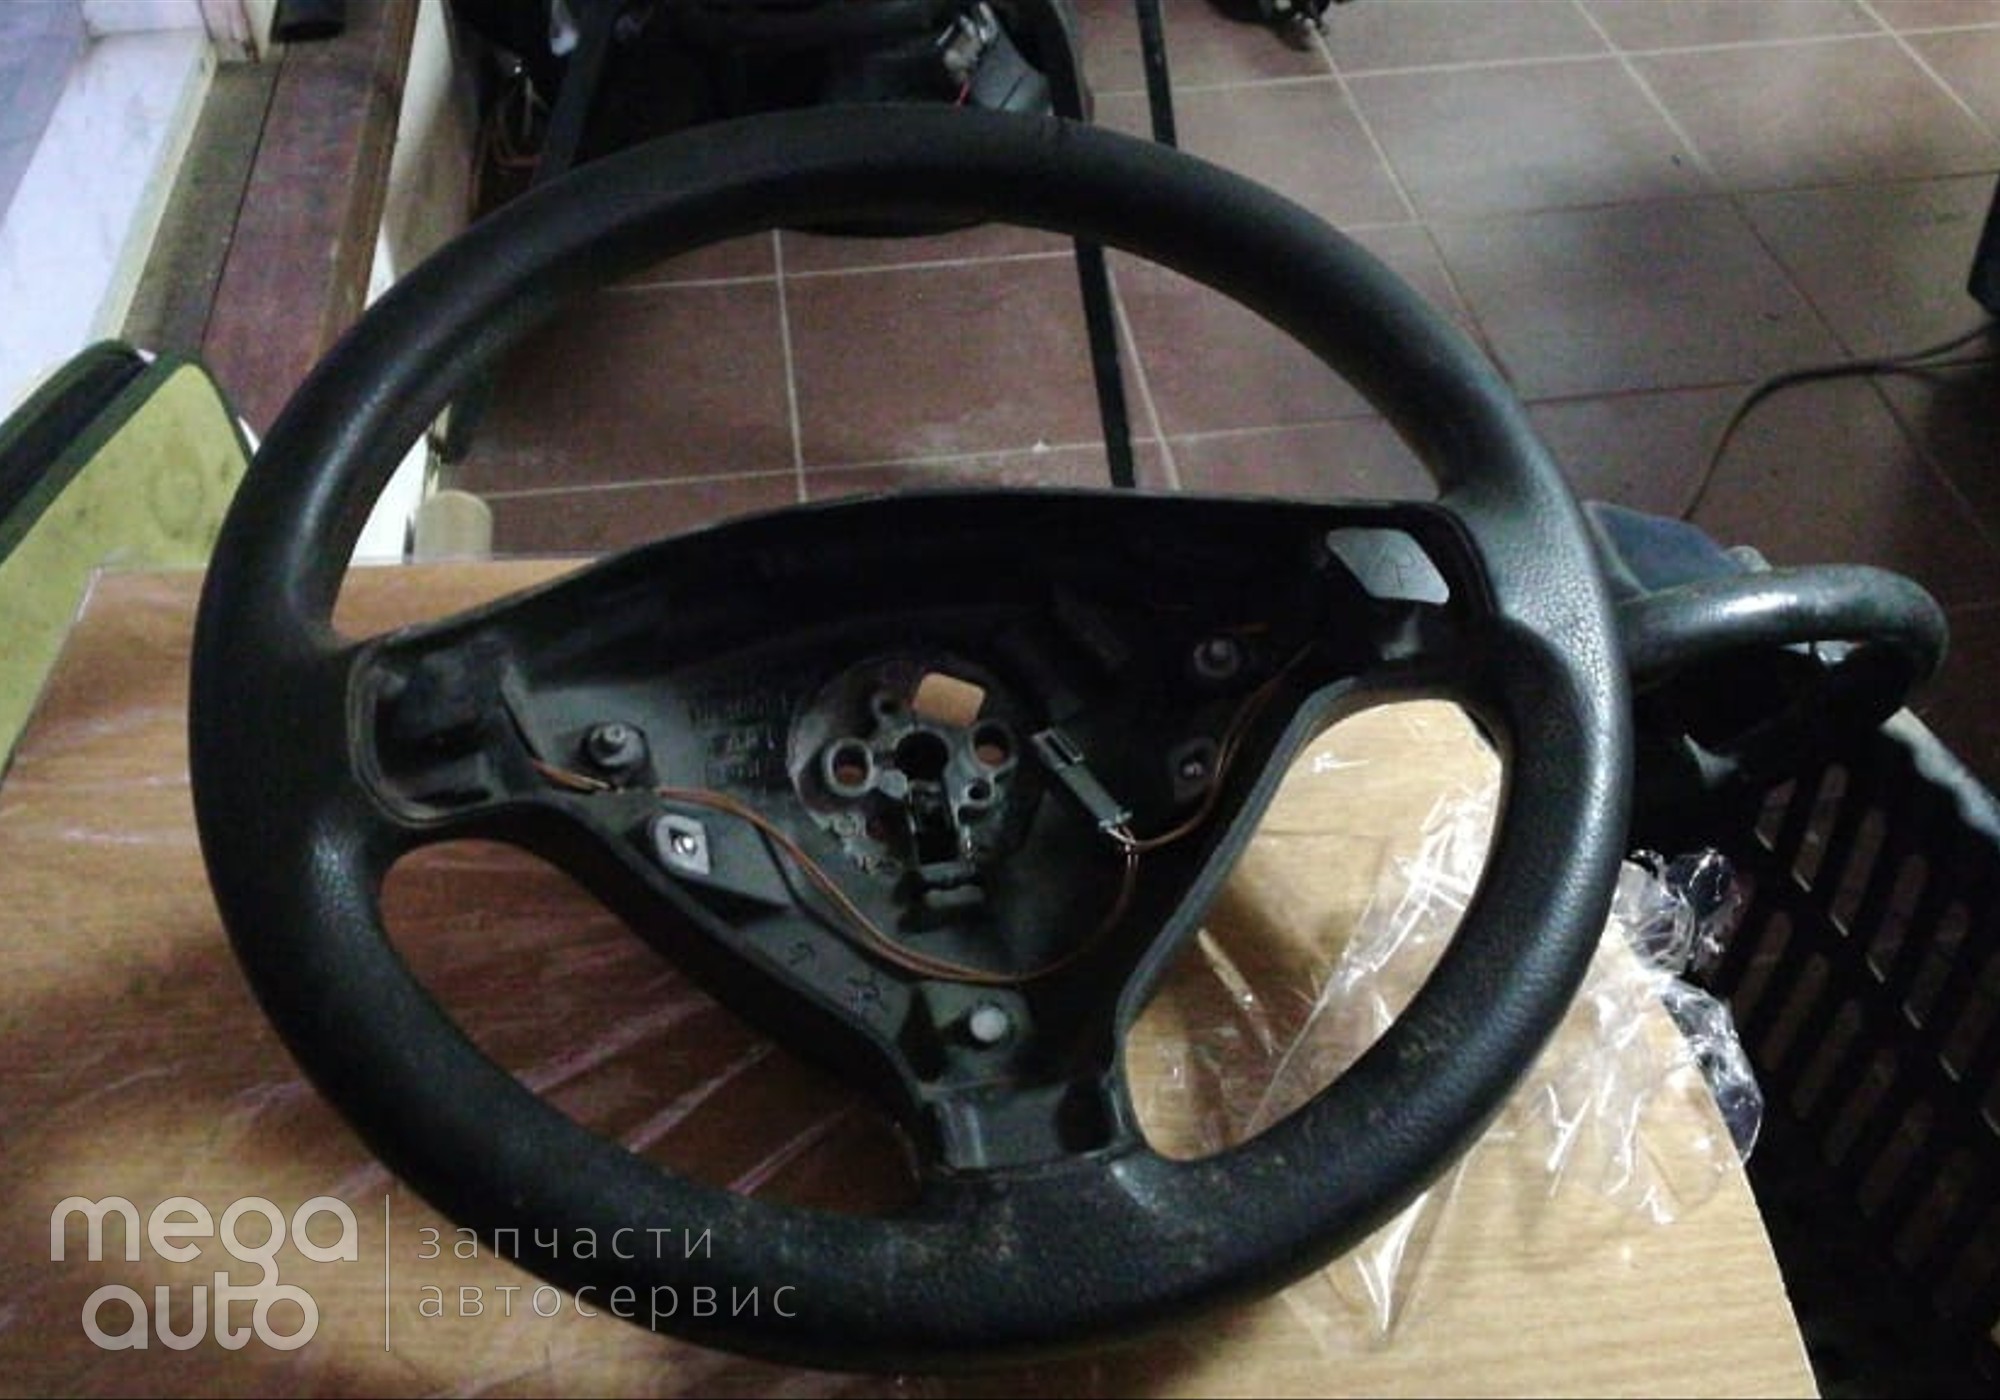 09127109 Рулевое колесо без подушки безопасности опель корса С для Opel Corsa C (с 2000 по 2006)